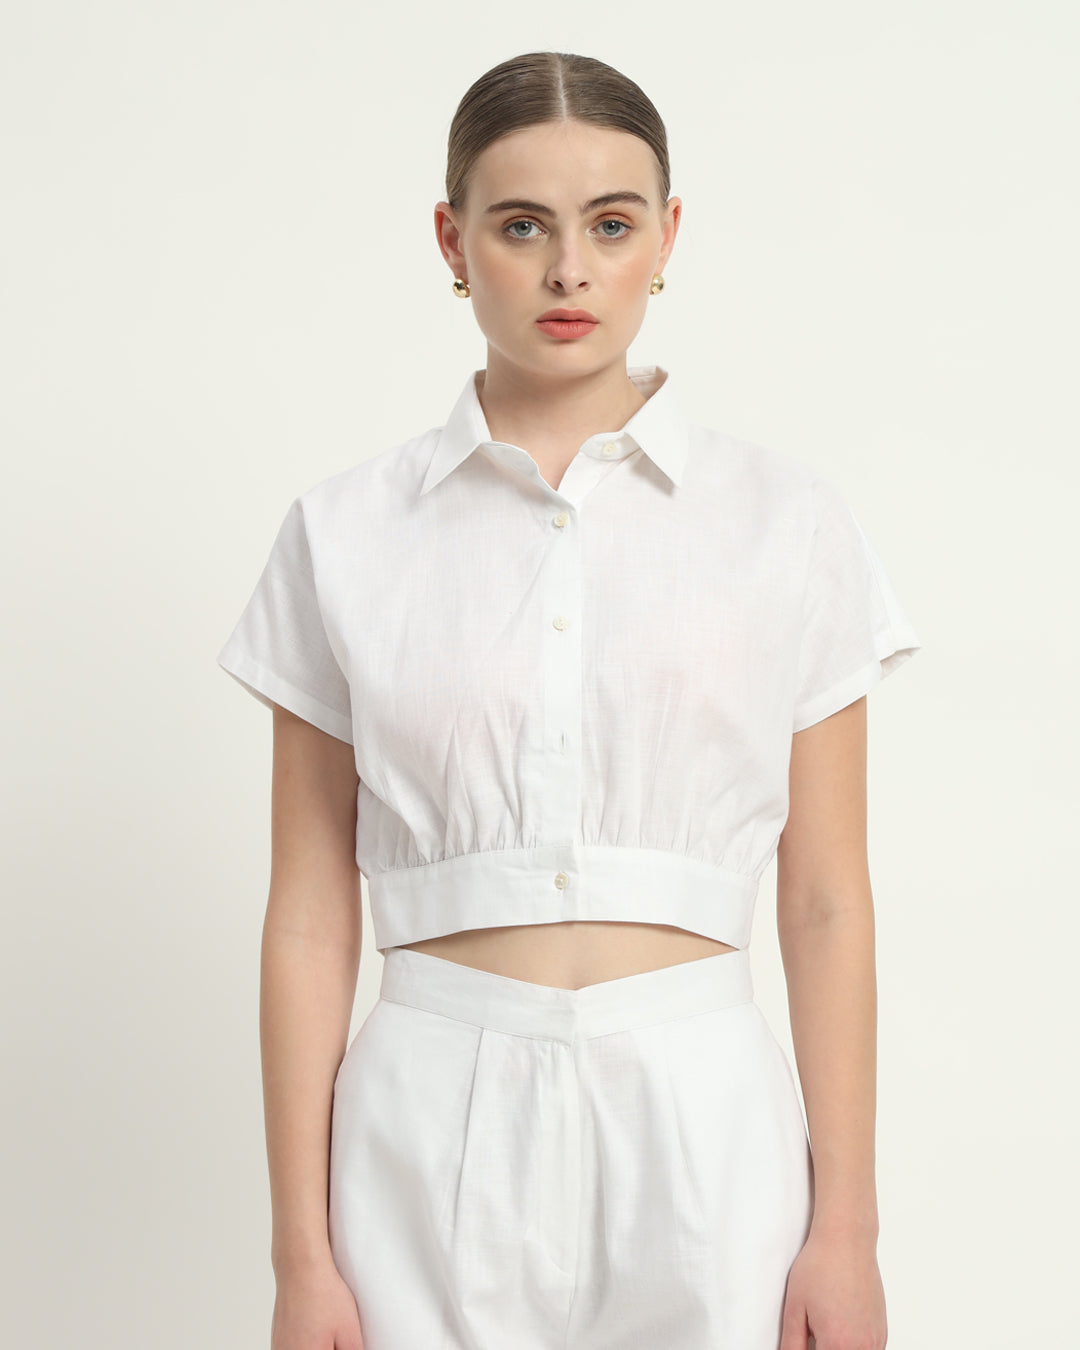 Shorts Matching Set- White Linen Chic Crop